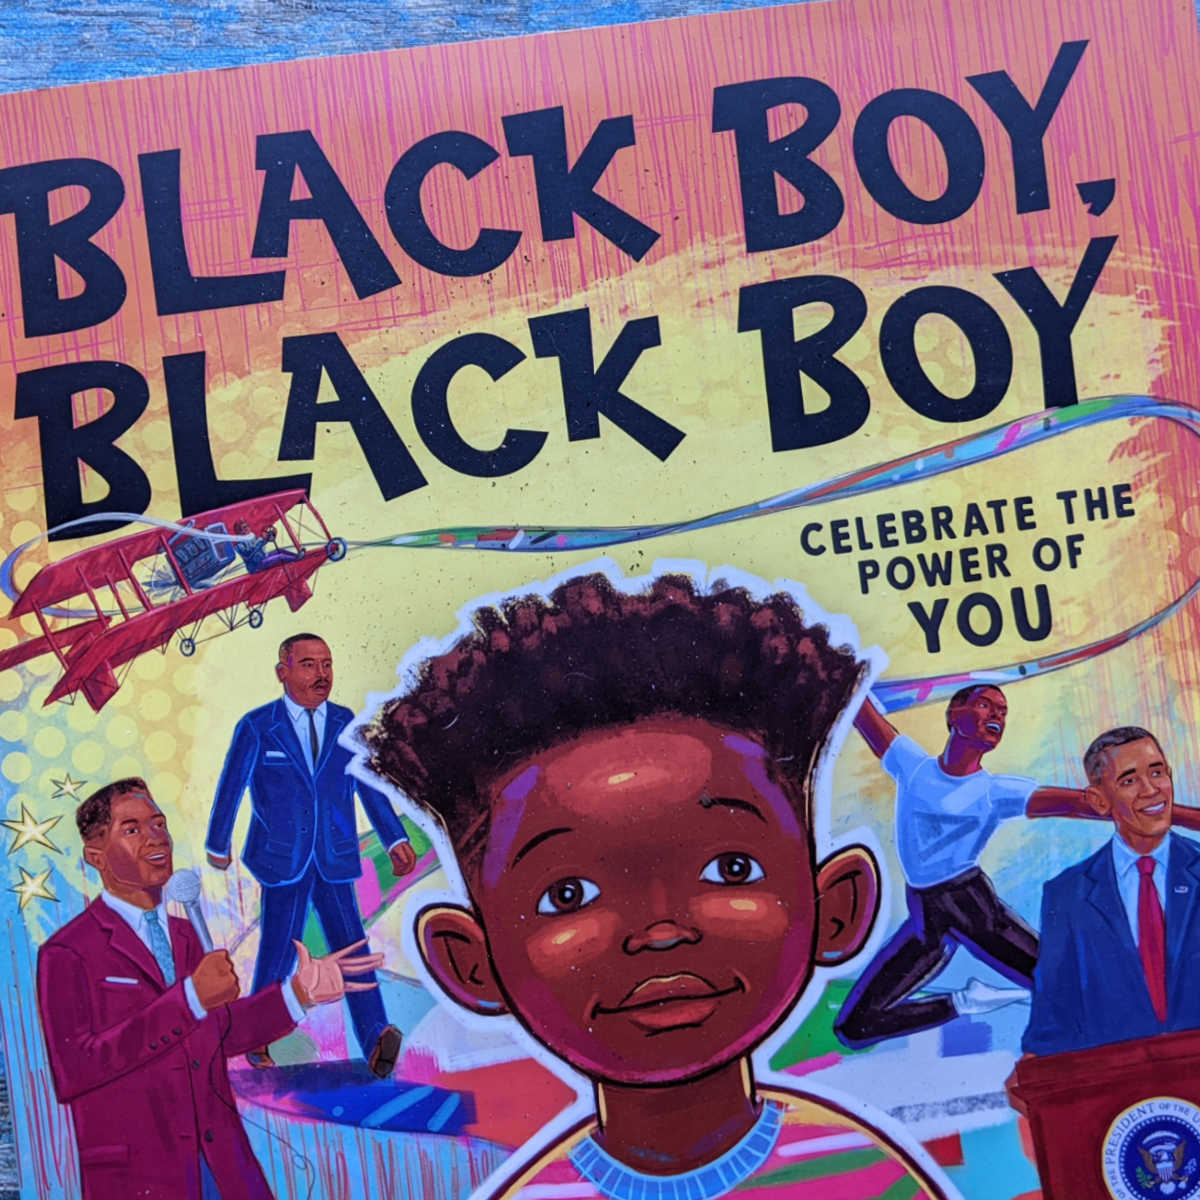 childrens book - black boy black boy celebrate the power of you